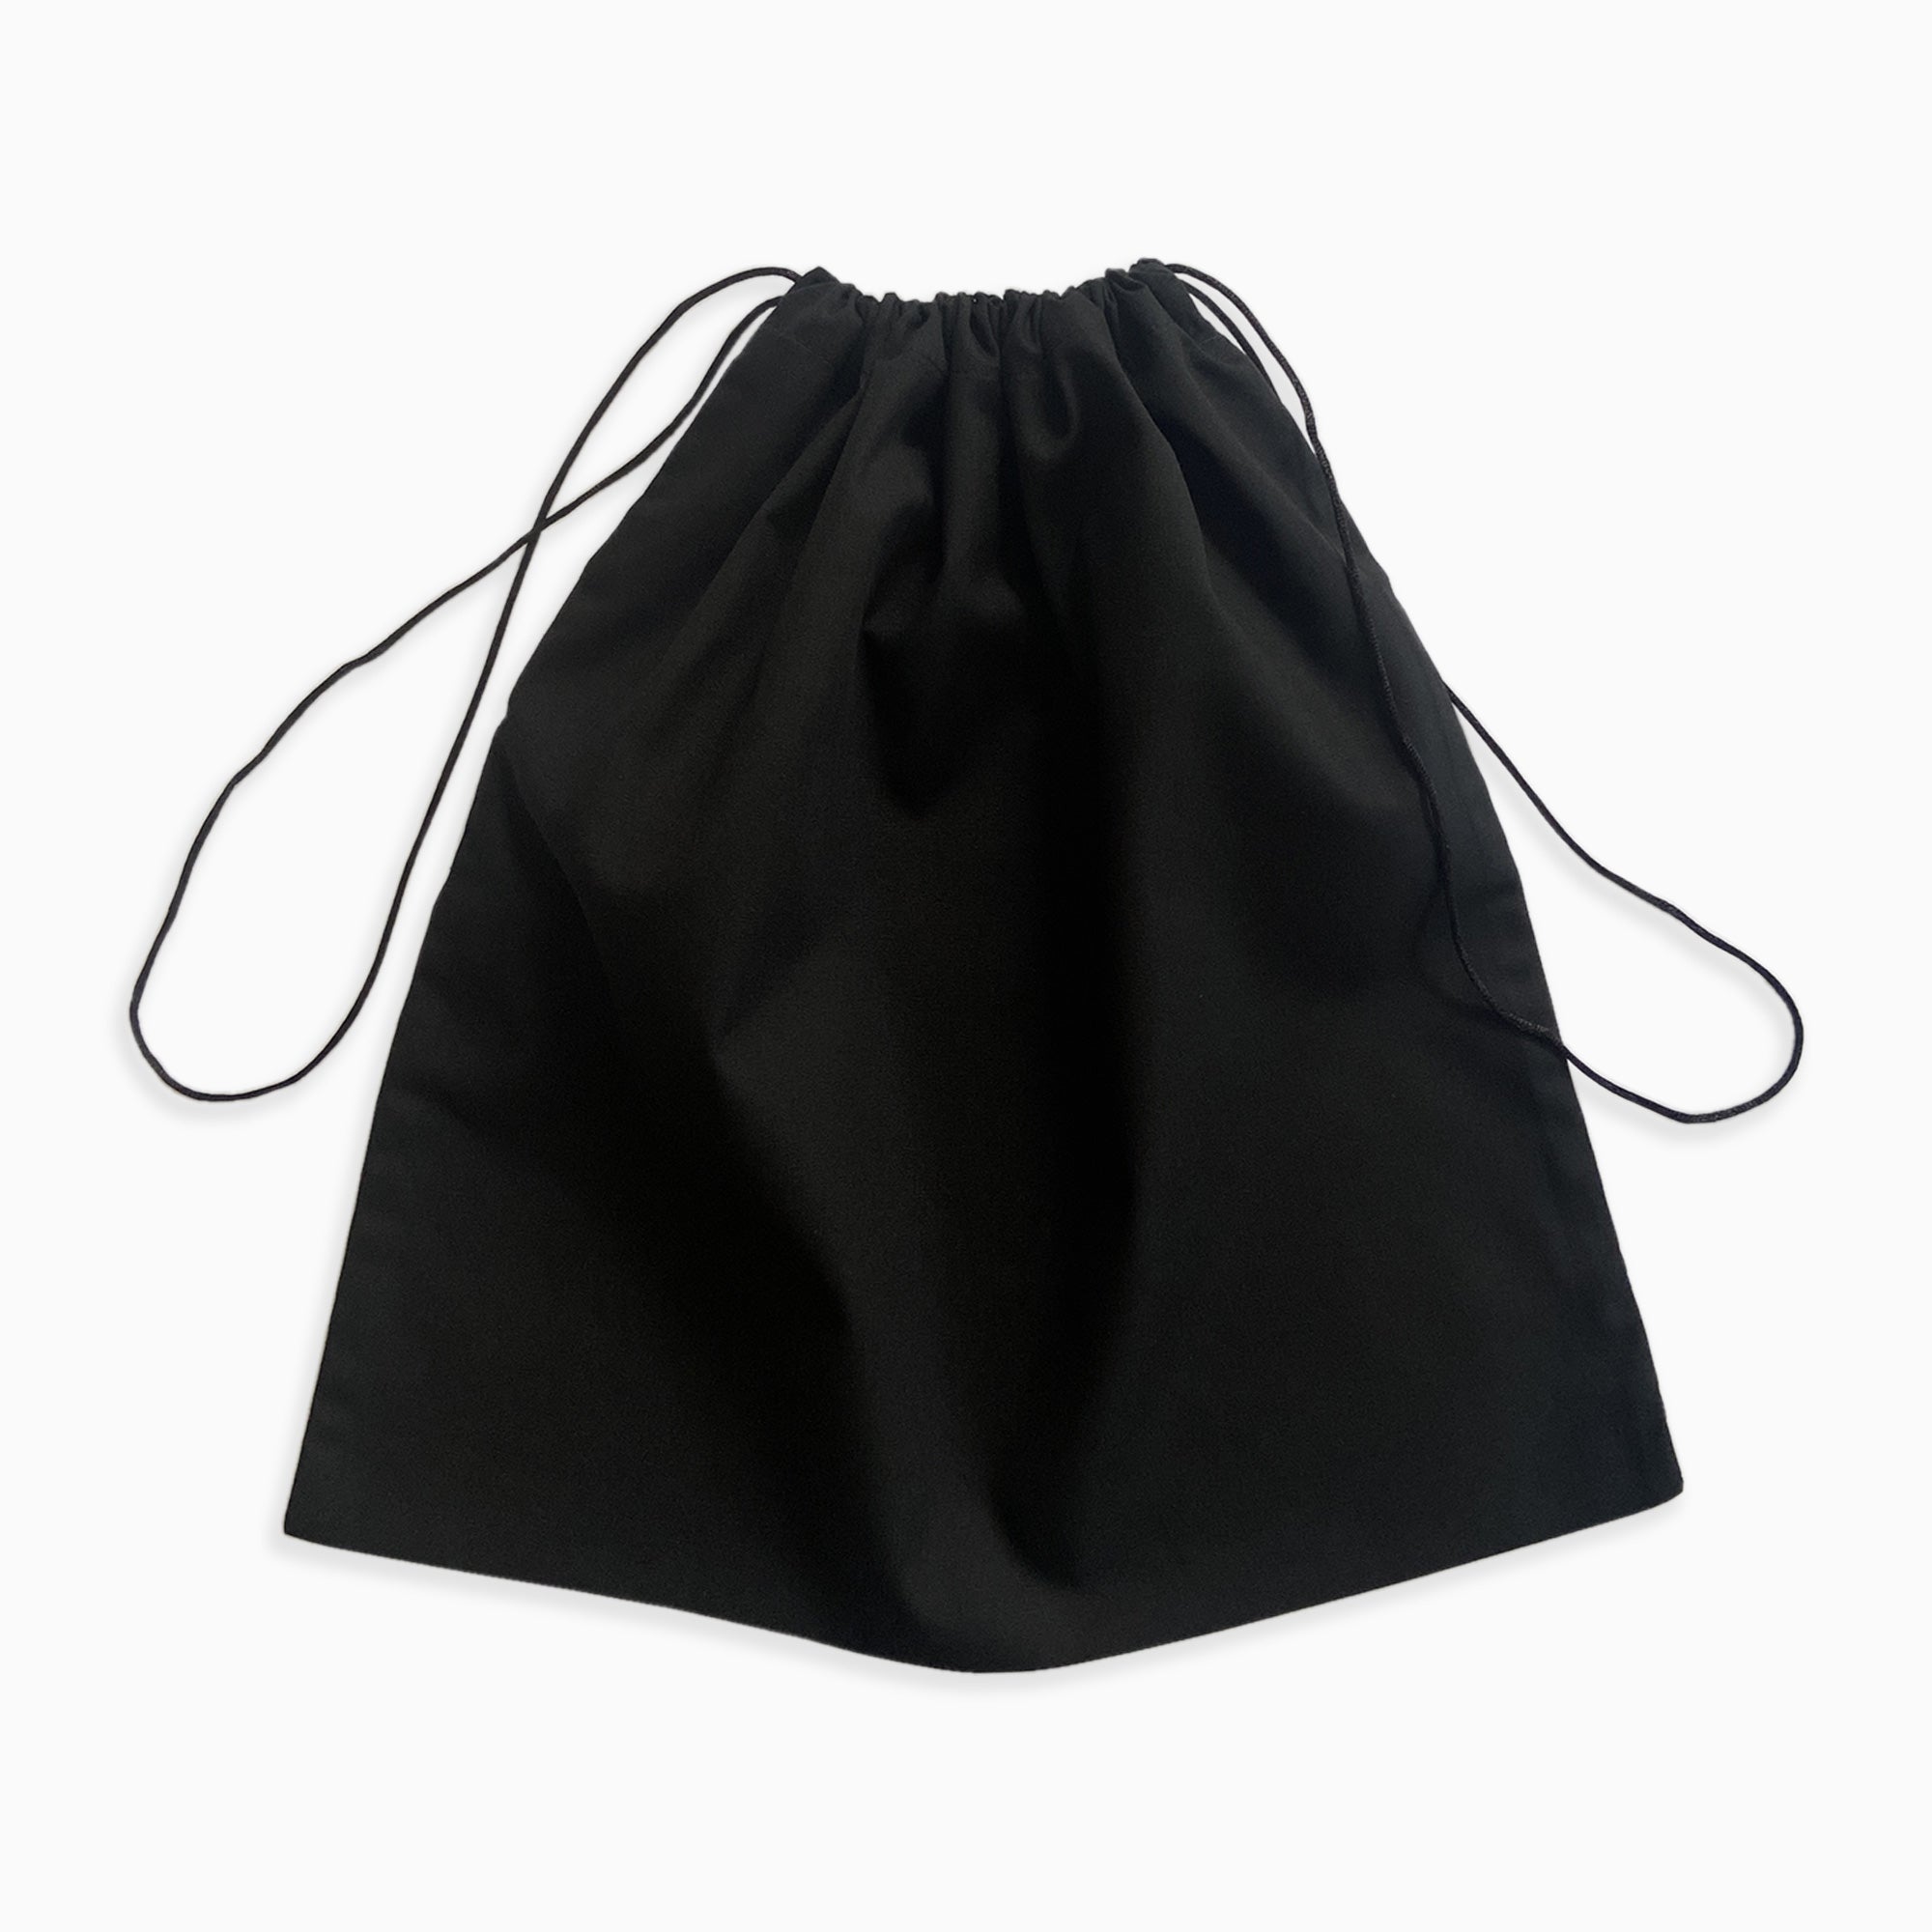 Black Cotton Drawstring Bag